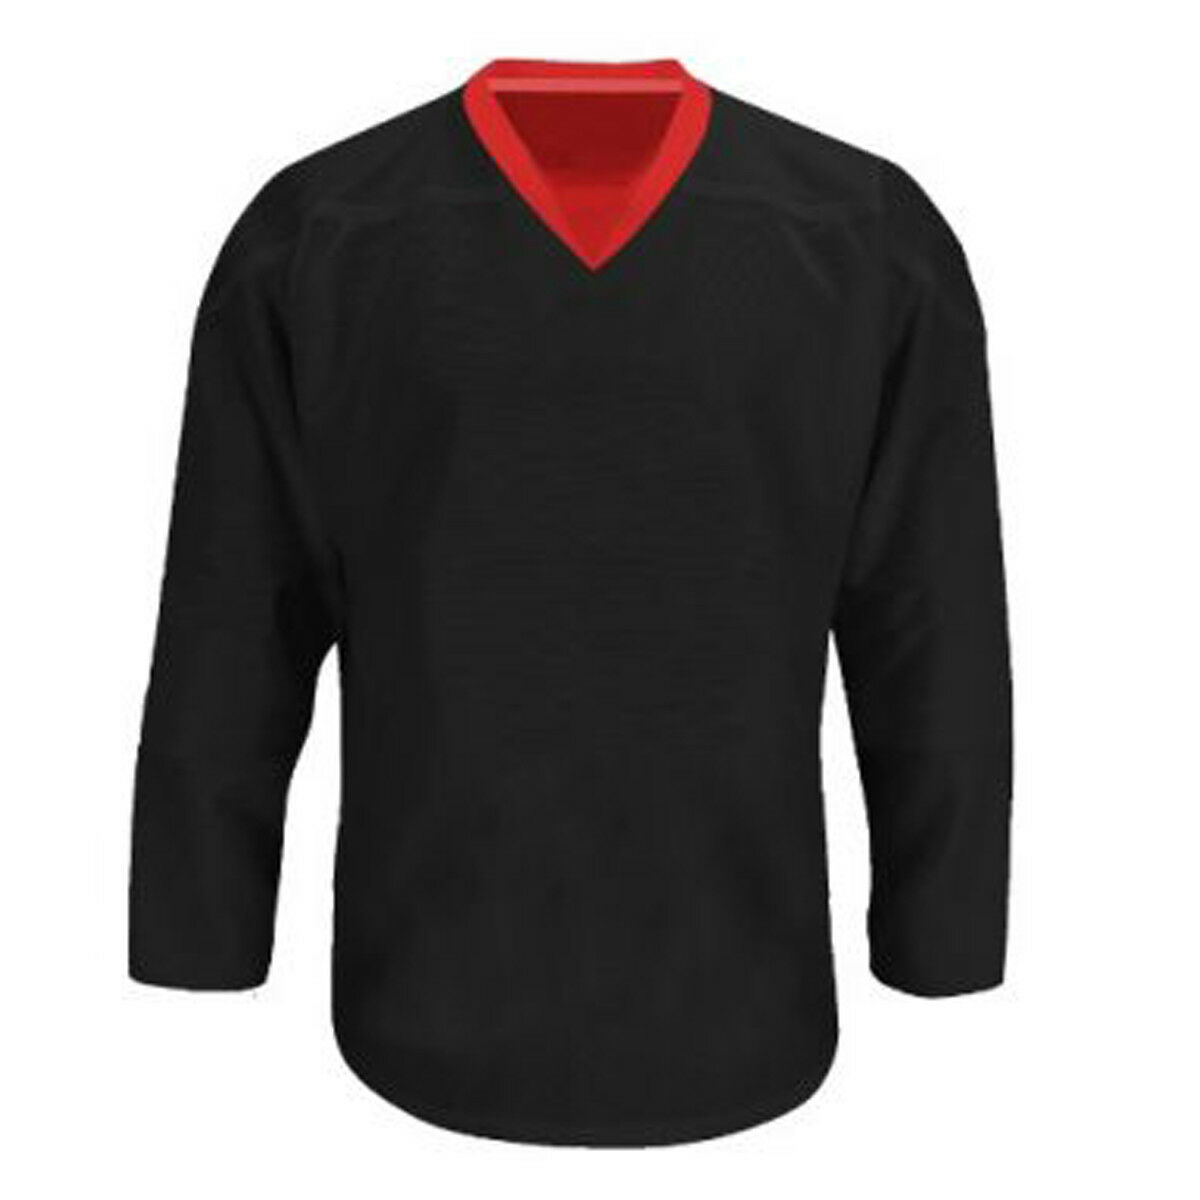 Troy Hockey Reversible Senior Hockey Jersey - Black, Red (new) Lists @ $30